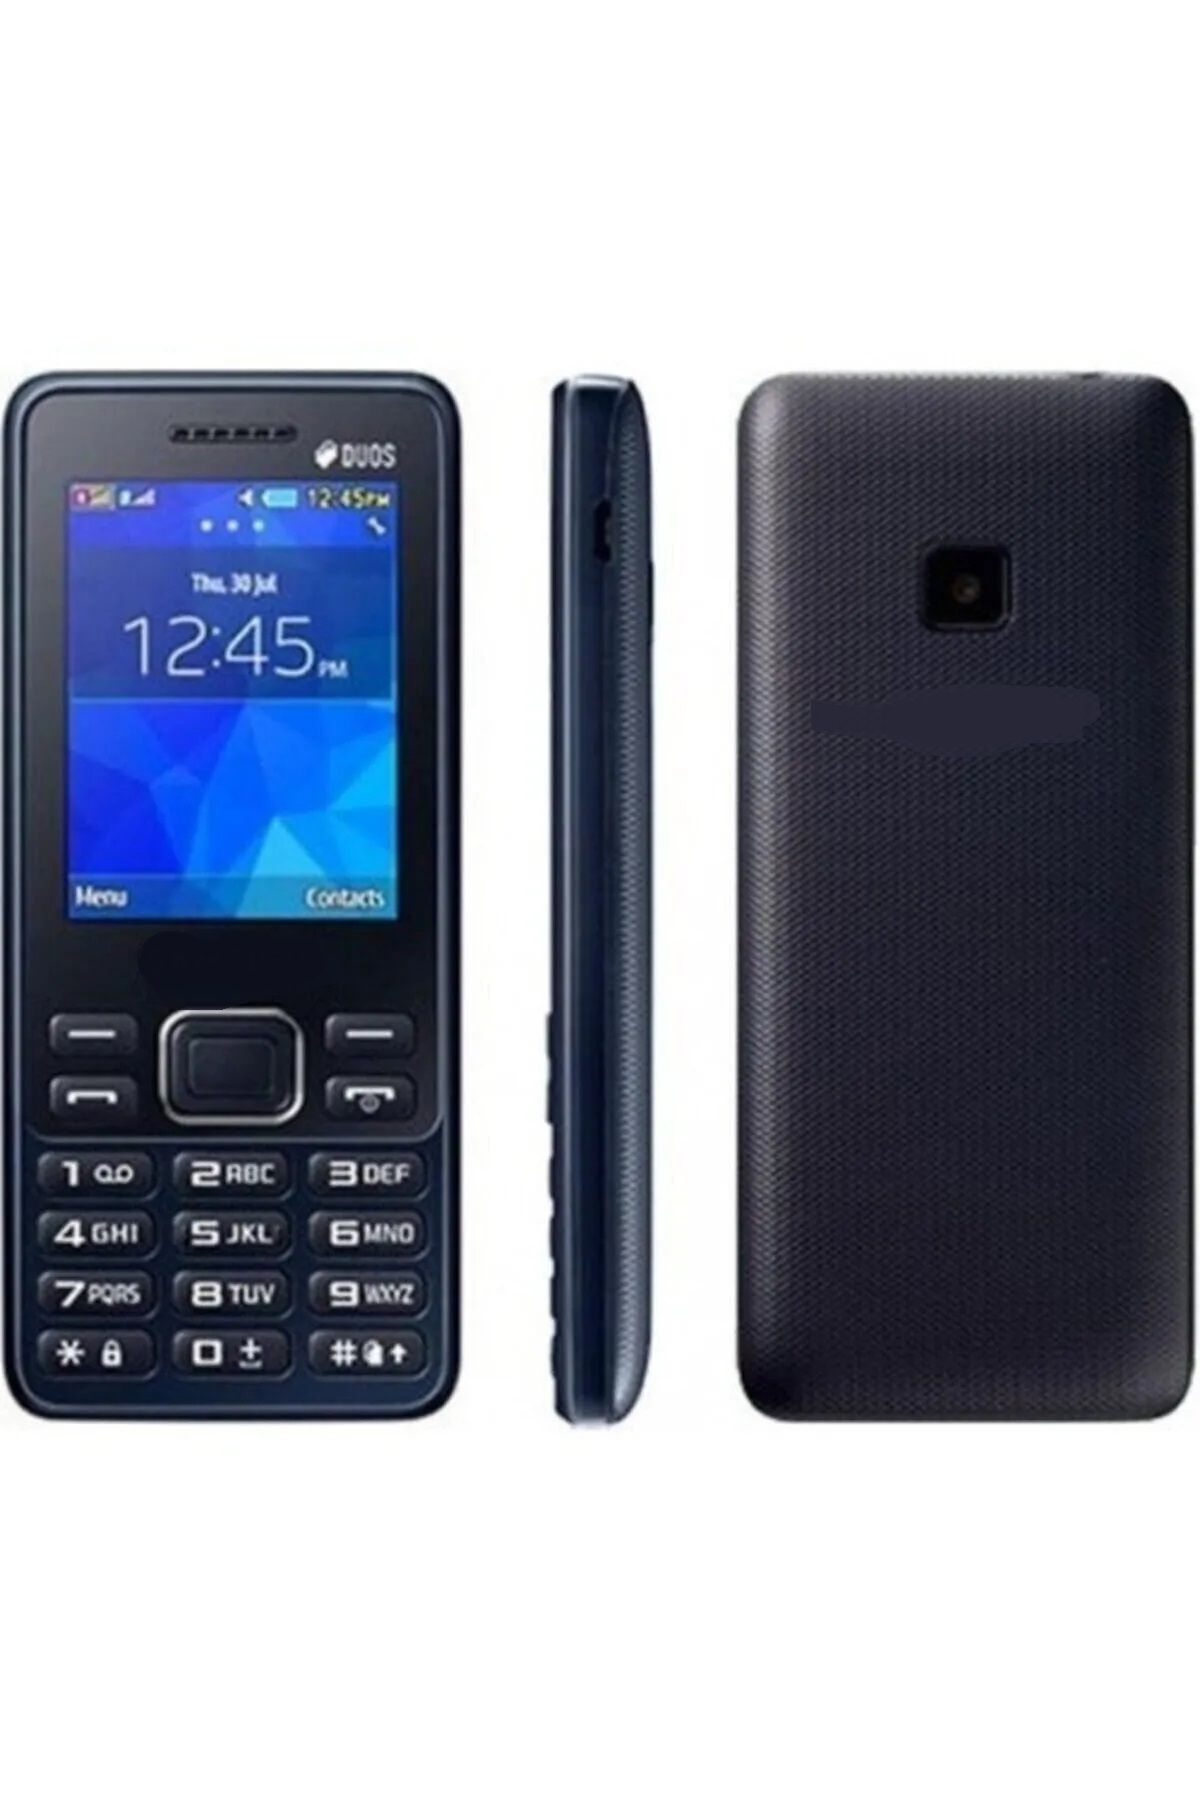 AYTAS GSM Samsung c3550 Kameralı Tuşlu Cep Telefonu